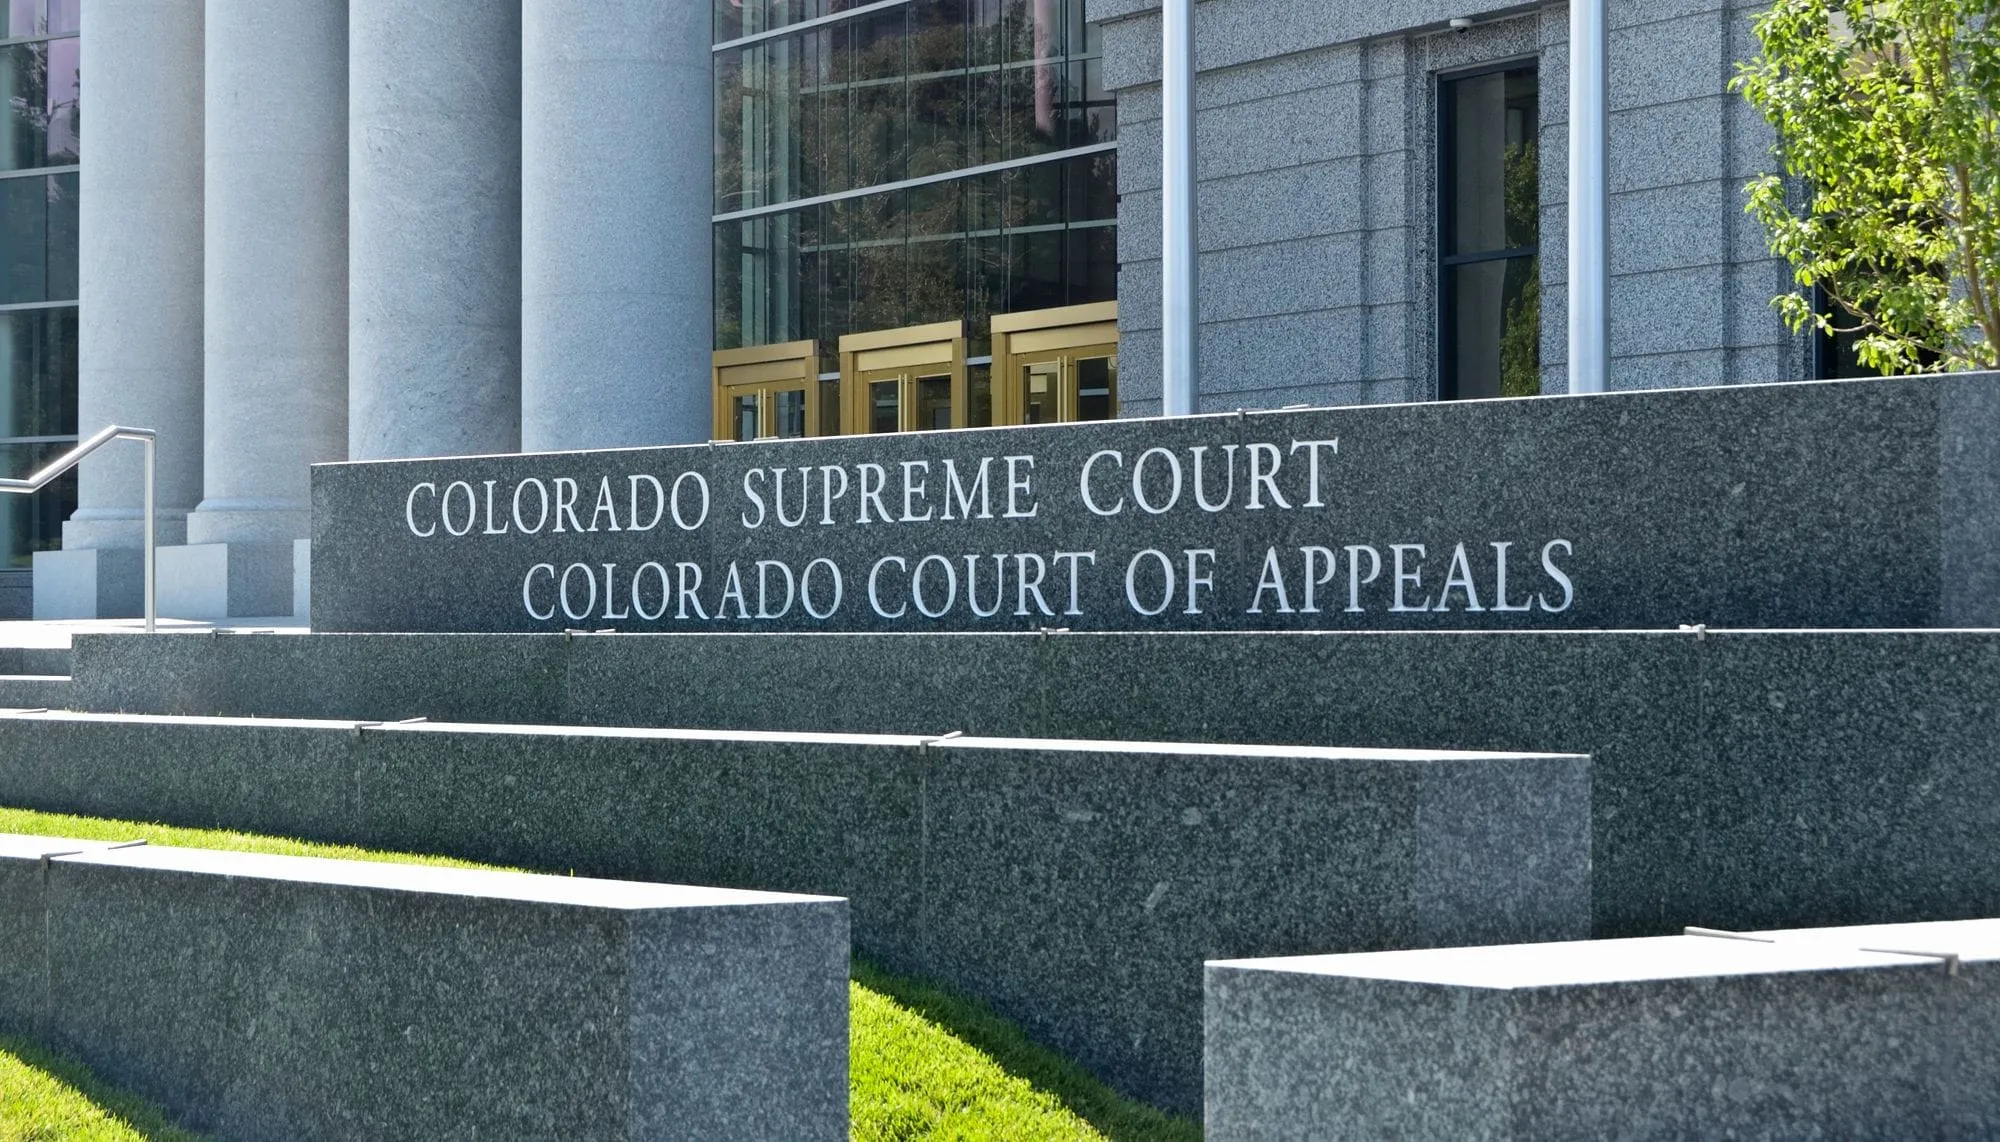 Court of appeals